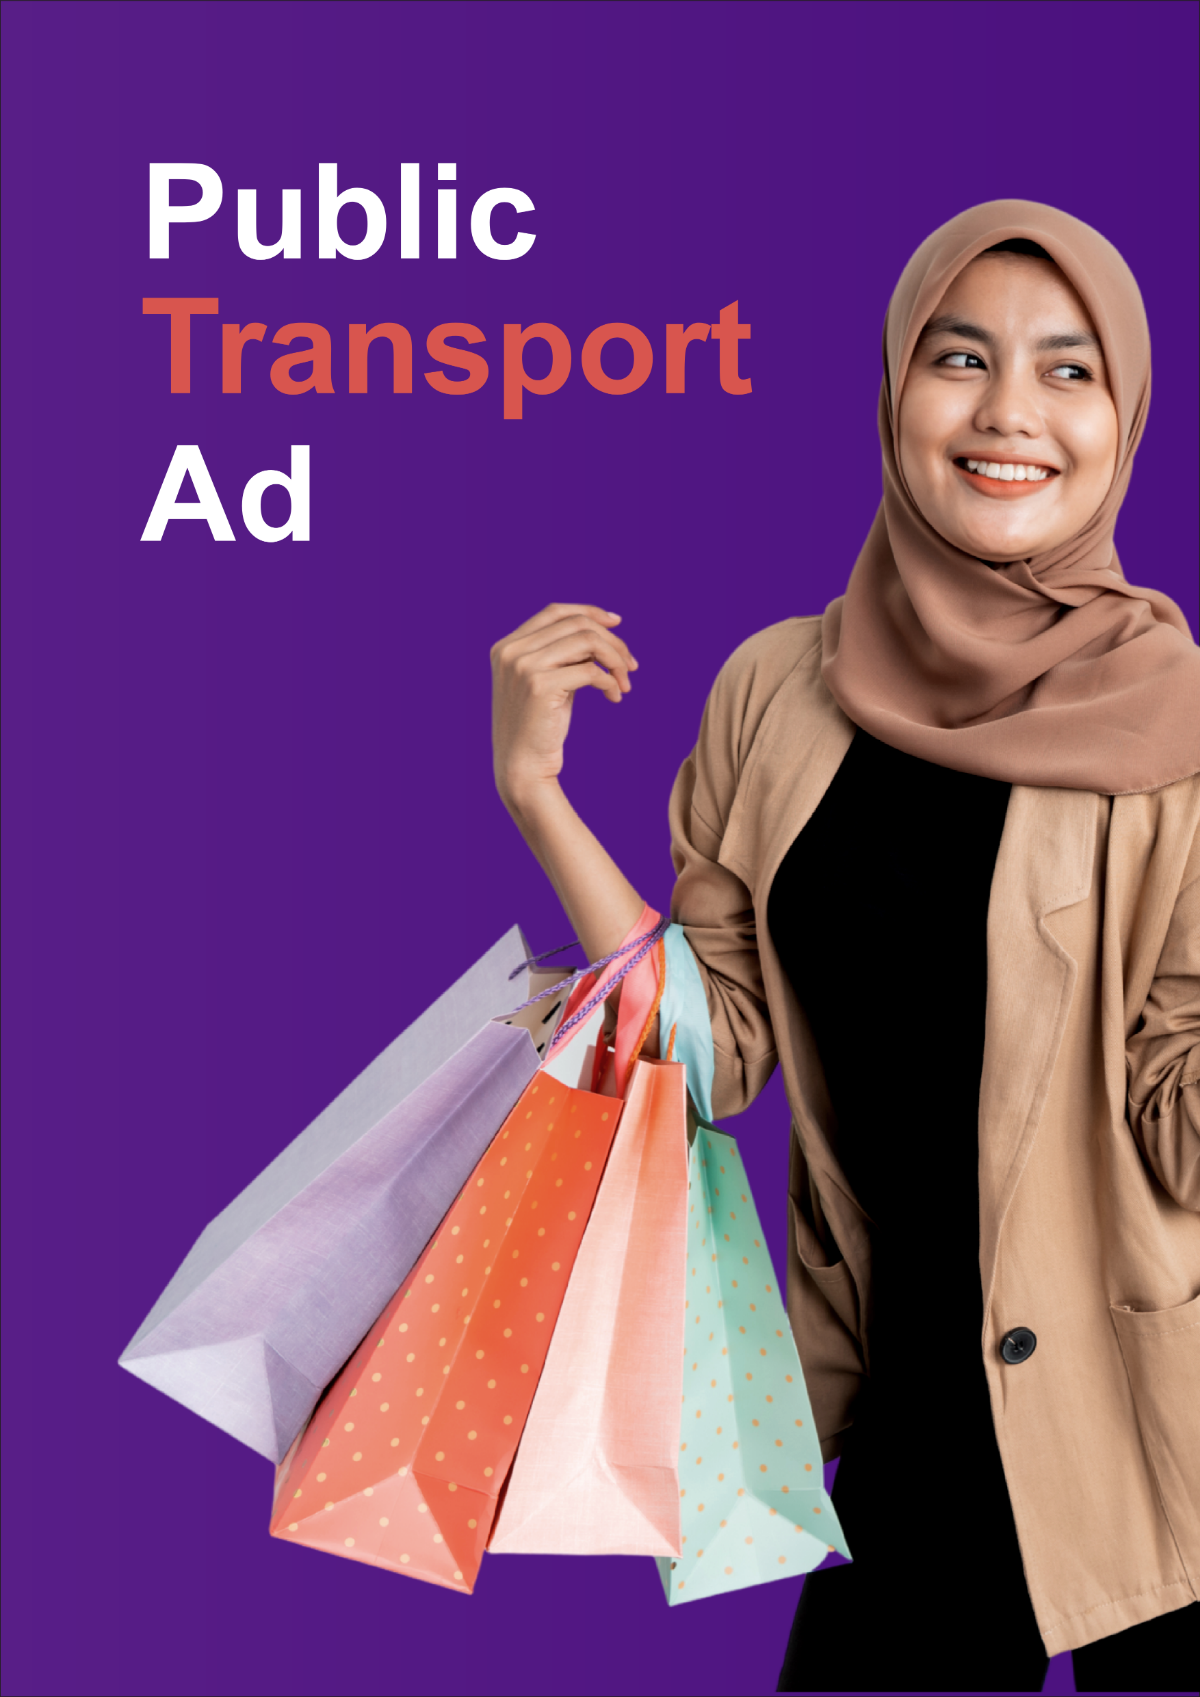 Public Transport Ad Signage Template